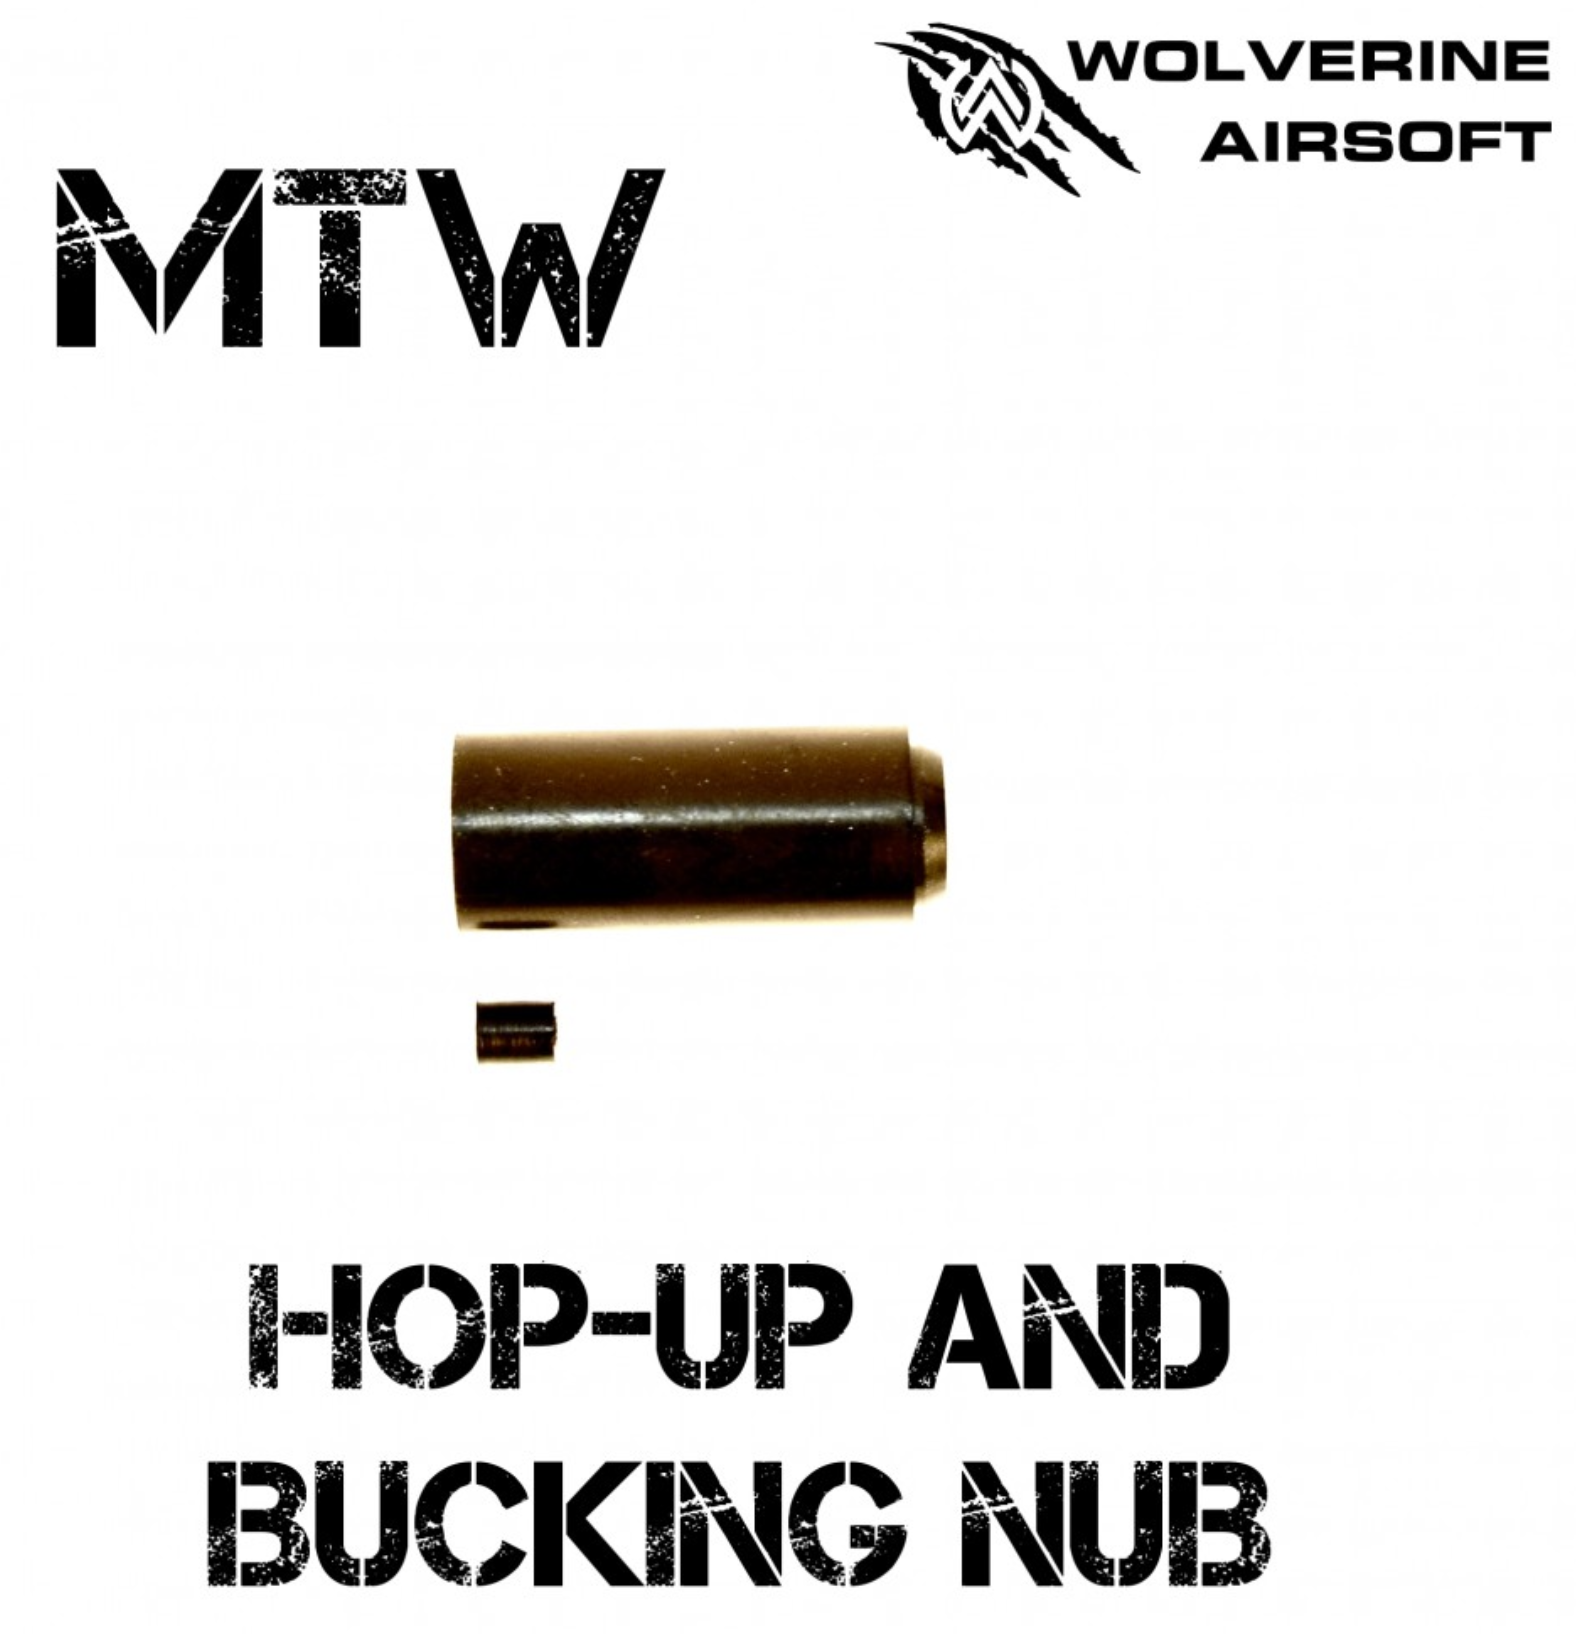 MTW Hop-Up and Bucking Nub